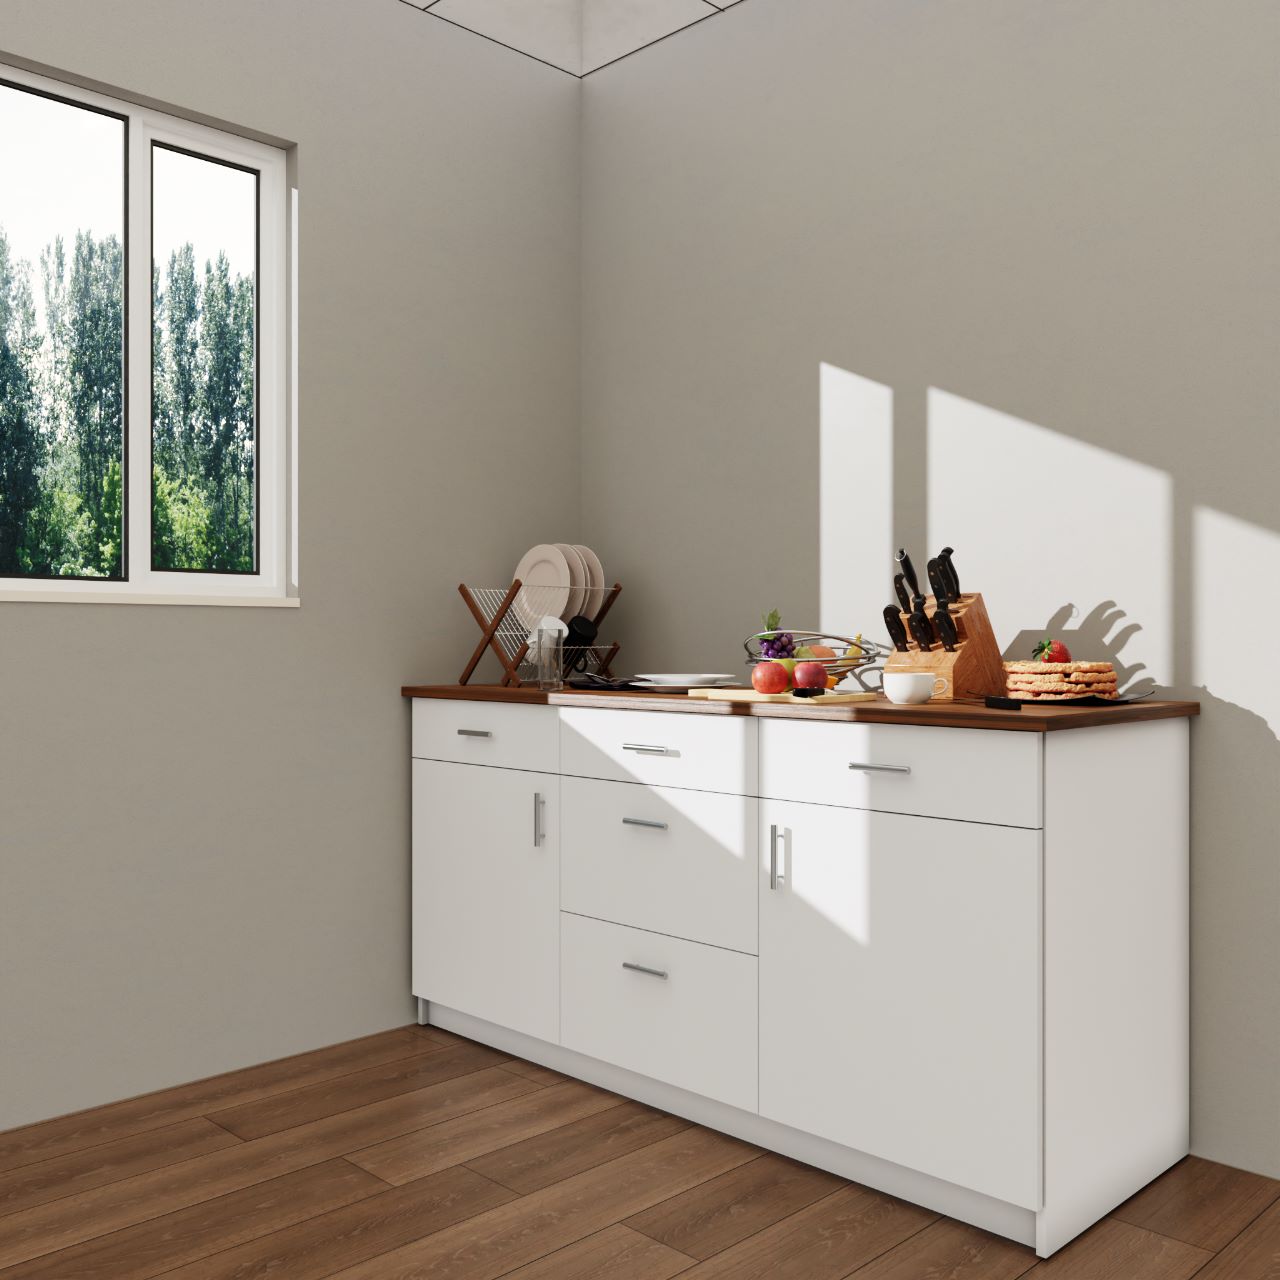 VIKI Kitchen Base Cabinets with 3 Drawer cabin , 2 drawer 2 doors - size : 180x88x60 CM ( Frosty White ) kitchen cabinet VIKI FURNITURE   